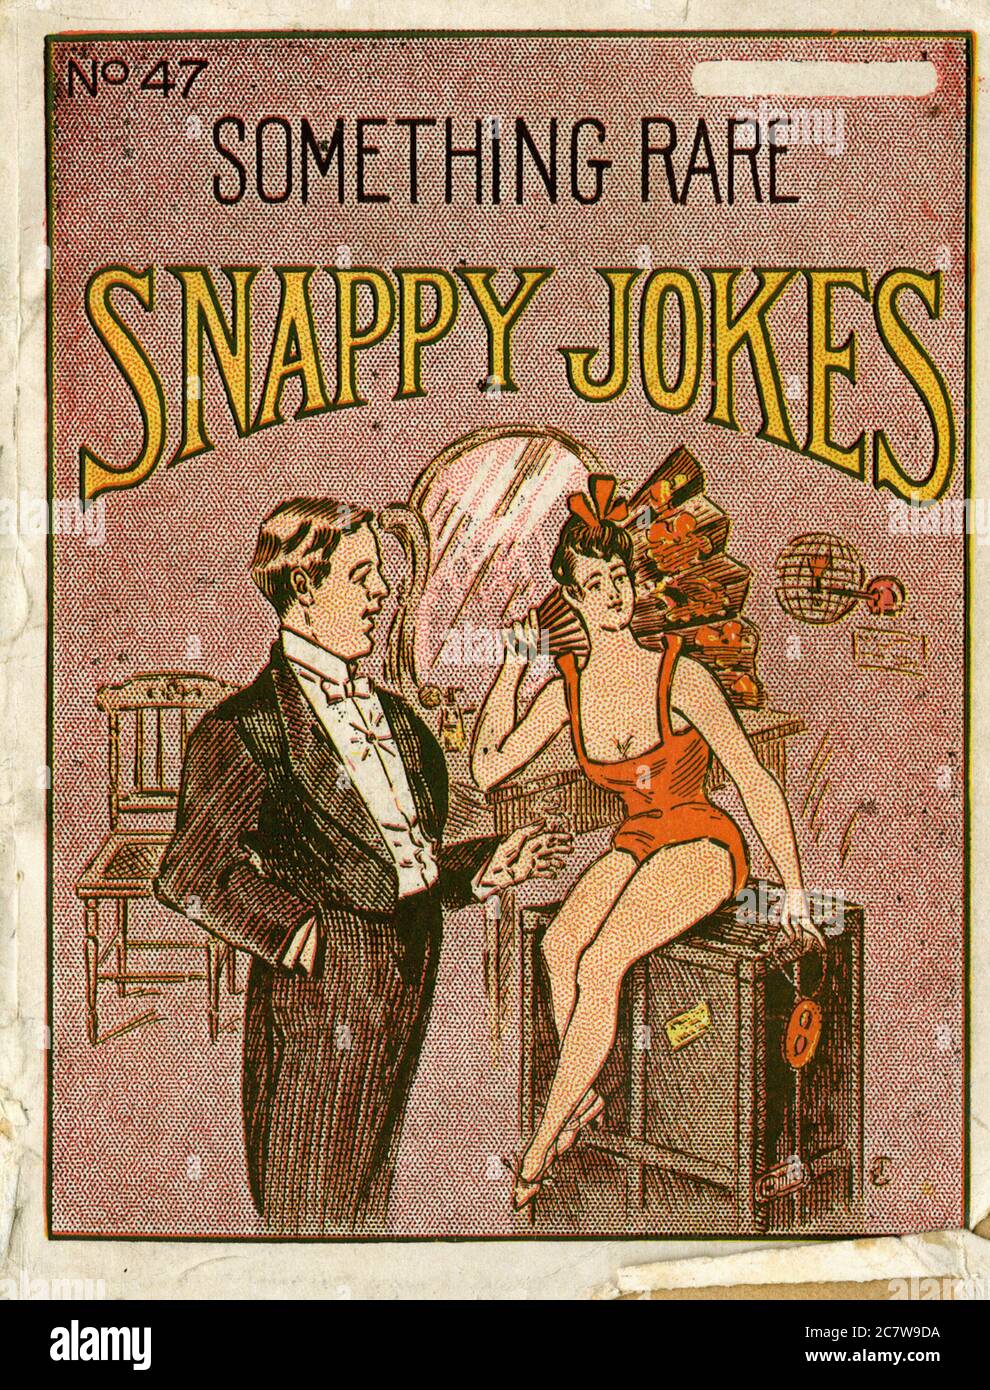 Snappy Jokes - Vintage early twenty century american jokes magazine Stock Photo